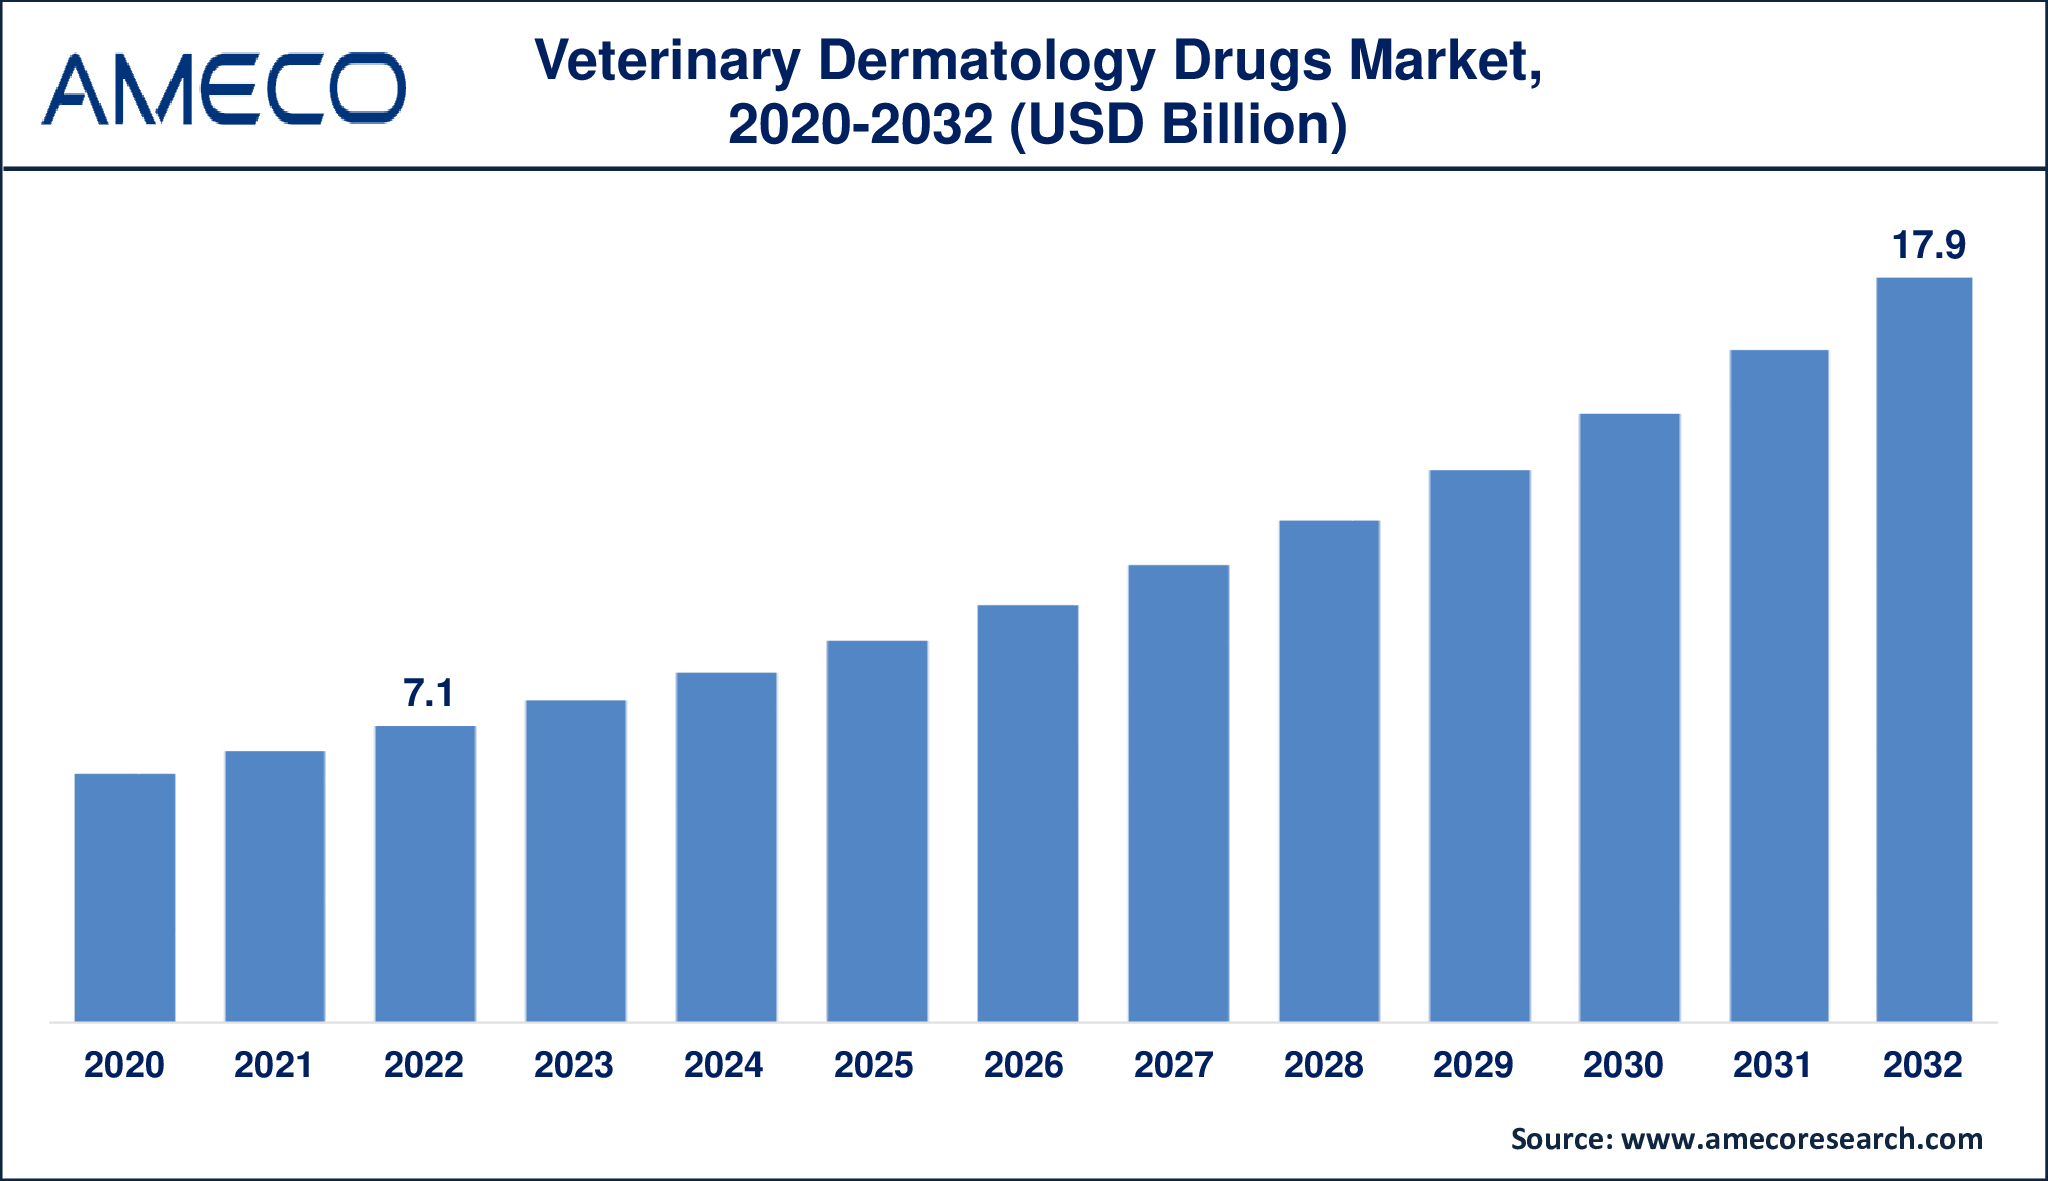 Veterinary Dermatology Drugs Market Dynamics